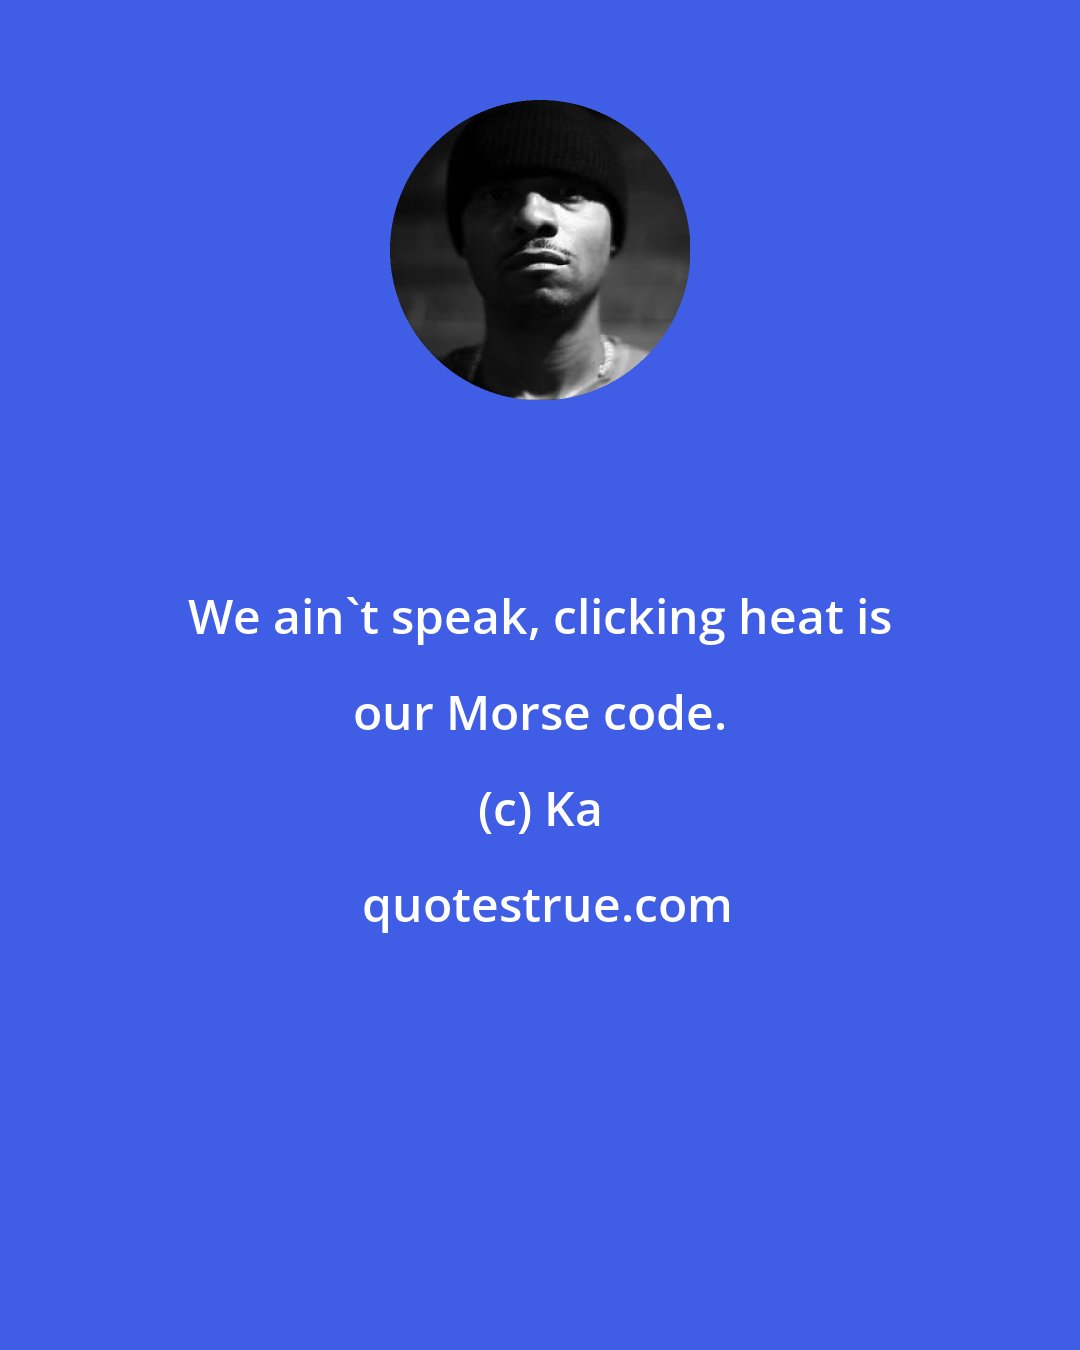 Ka: We ain't speak, clicking heat is our Morse code.